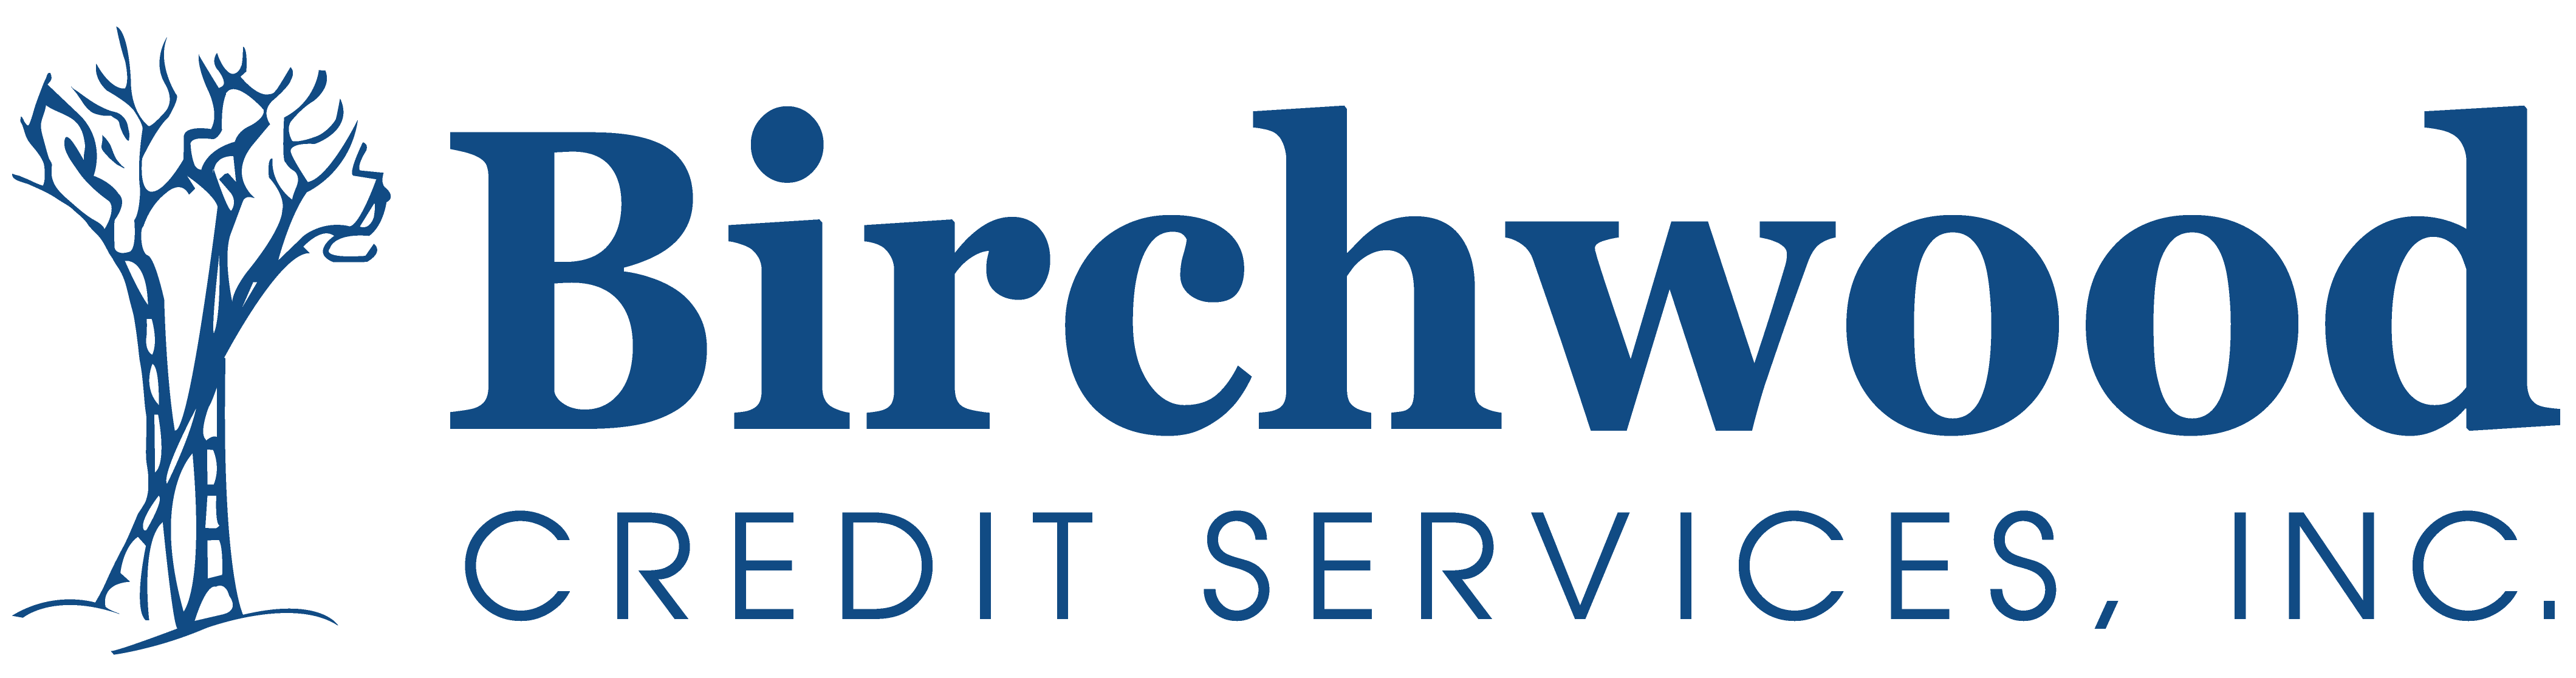 Birchwood Credit Services, Inc.